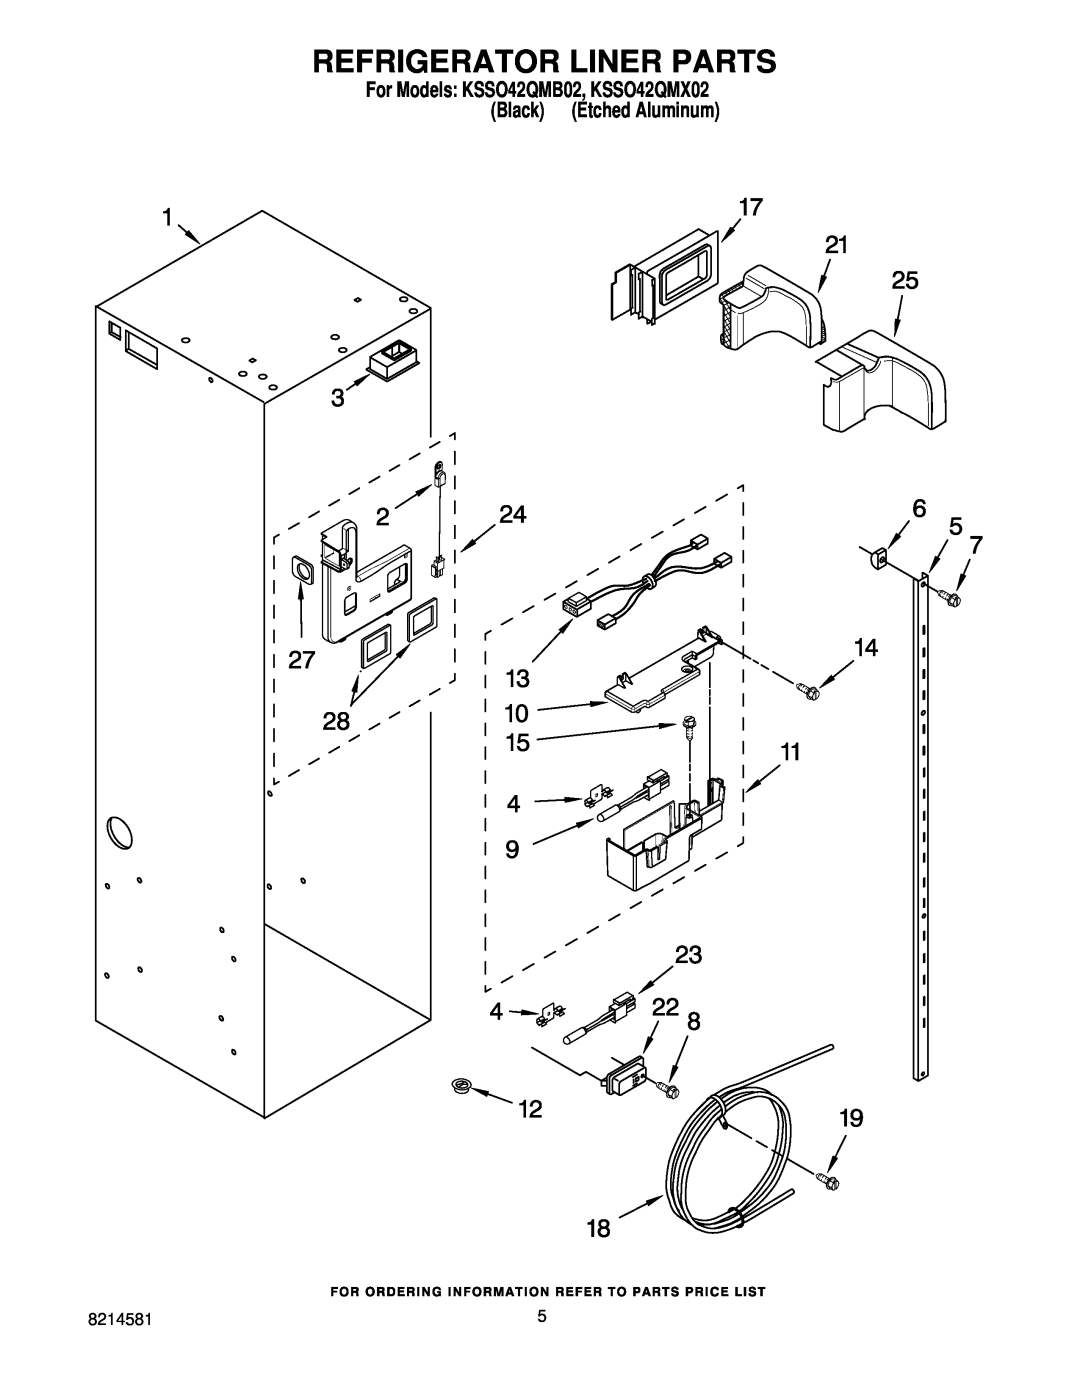 KitchenAid manual Refrigerator Liner Parts, For Models KSSO42QMB02, KSSO42QMX02 Black Etched Aluminum 